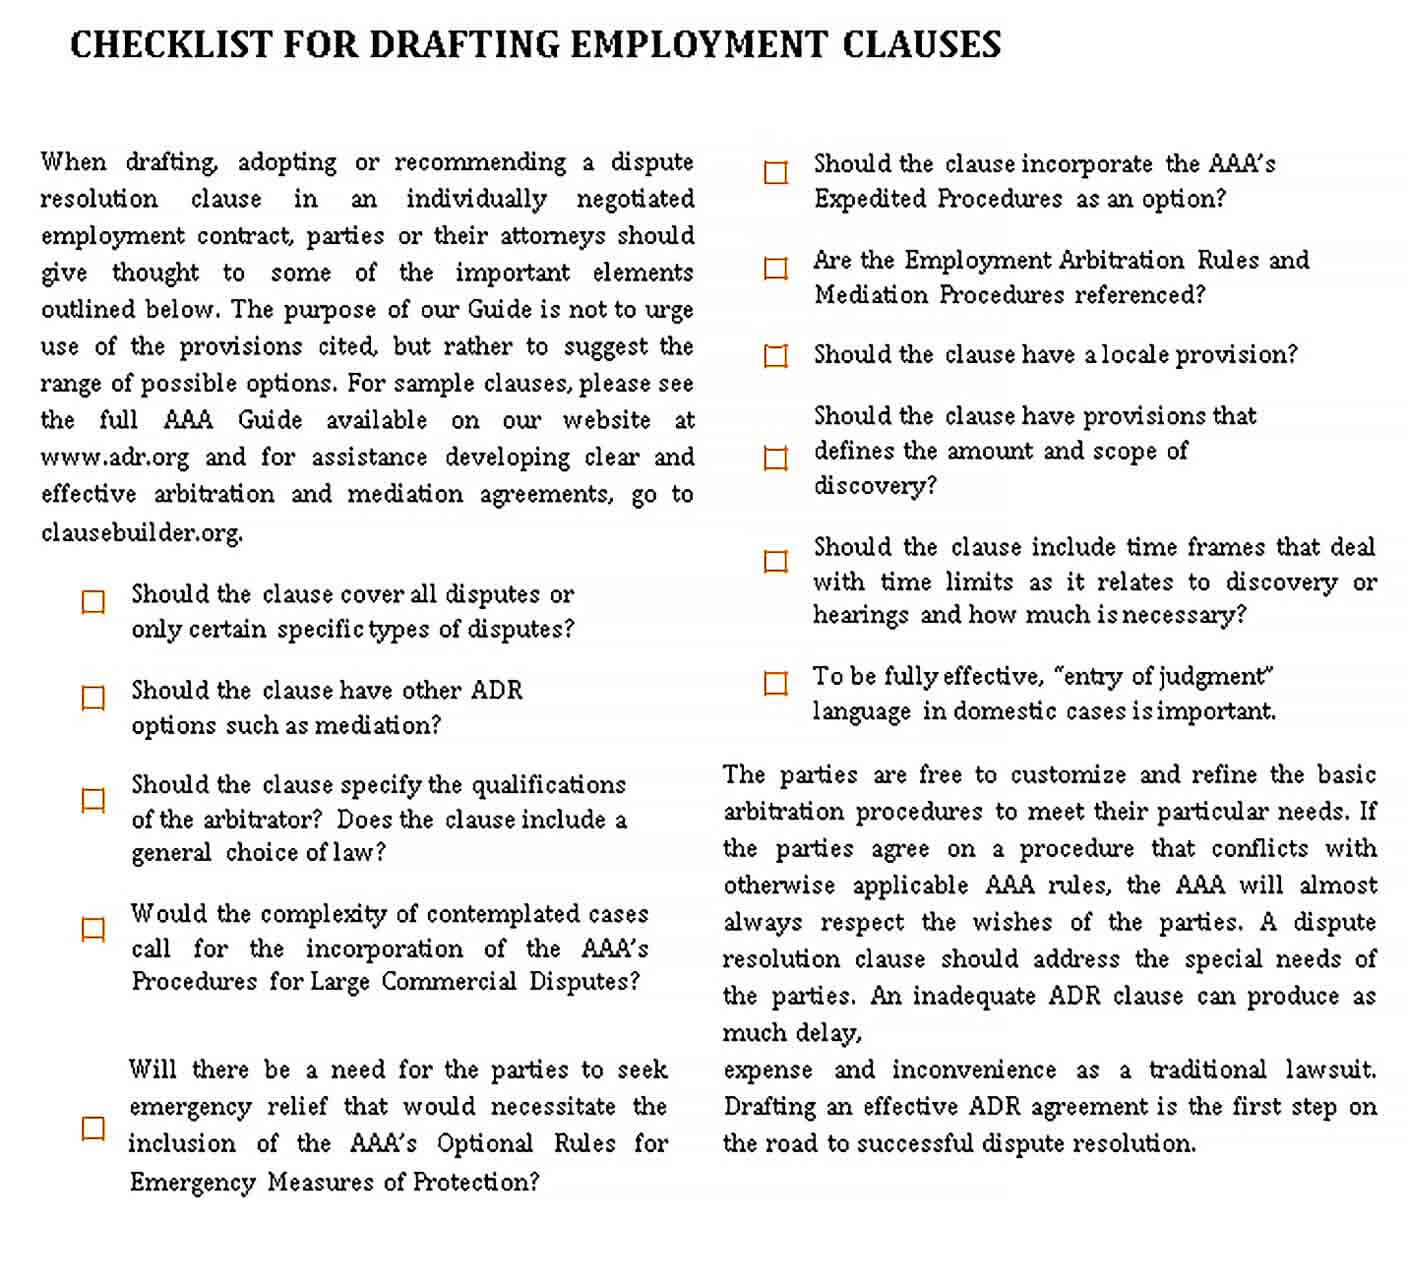 Sample Employment Drafting Checklist